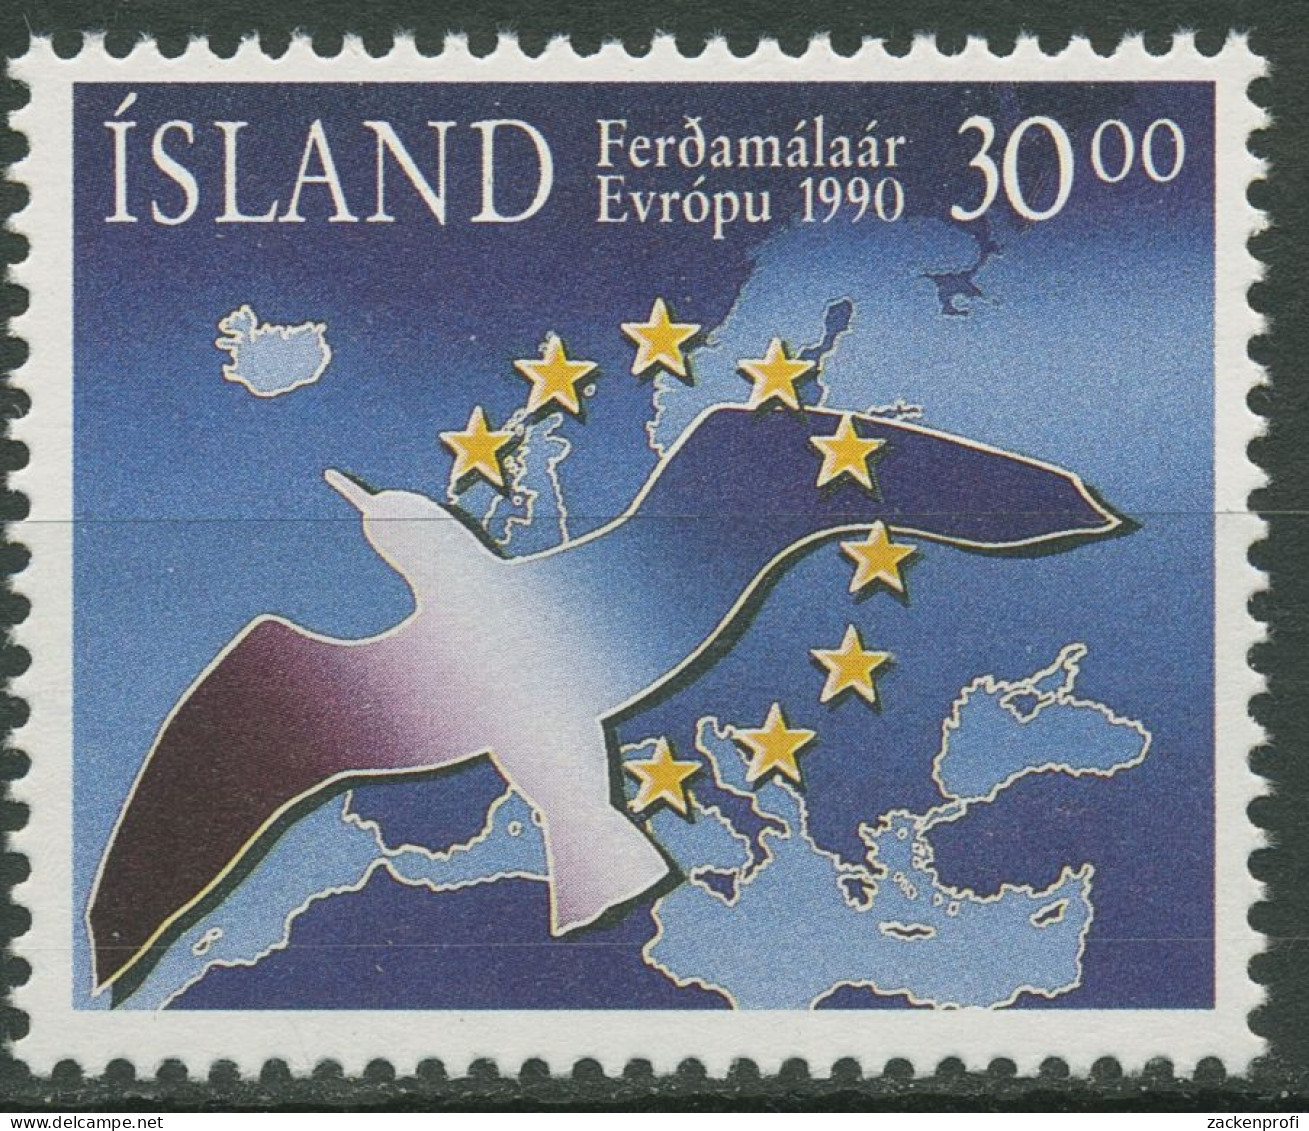 Island 1990 Tourismus Landkarte Europas Vögel 730 Postfrisch - Nuovi